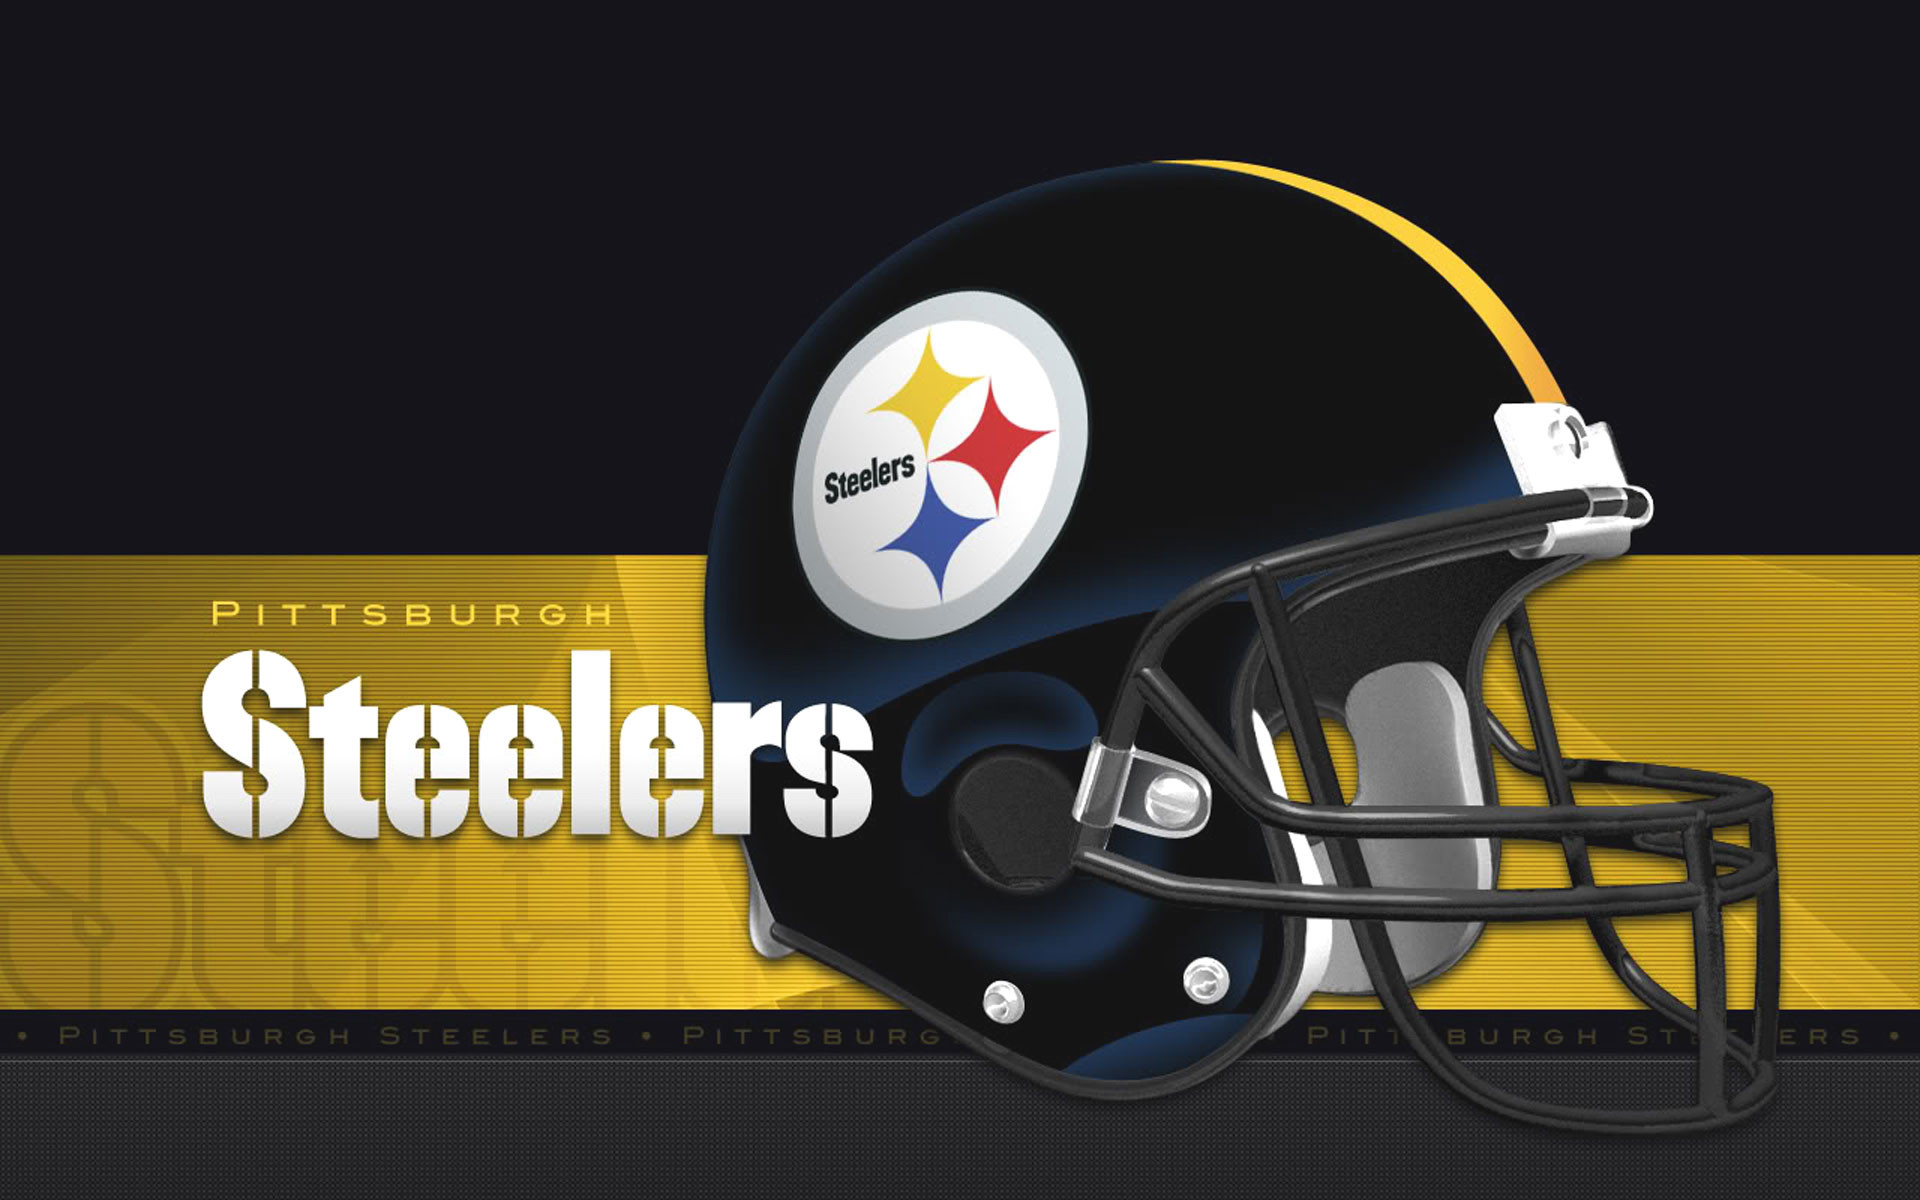 Steelers Football Wallpapers